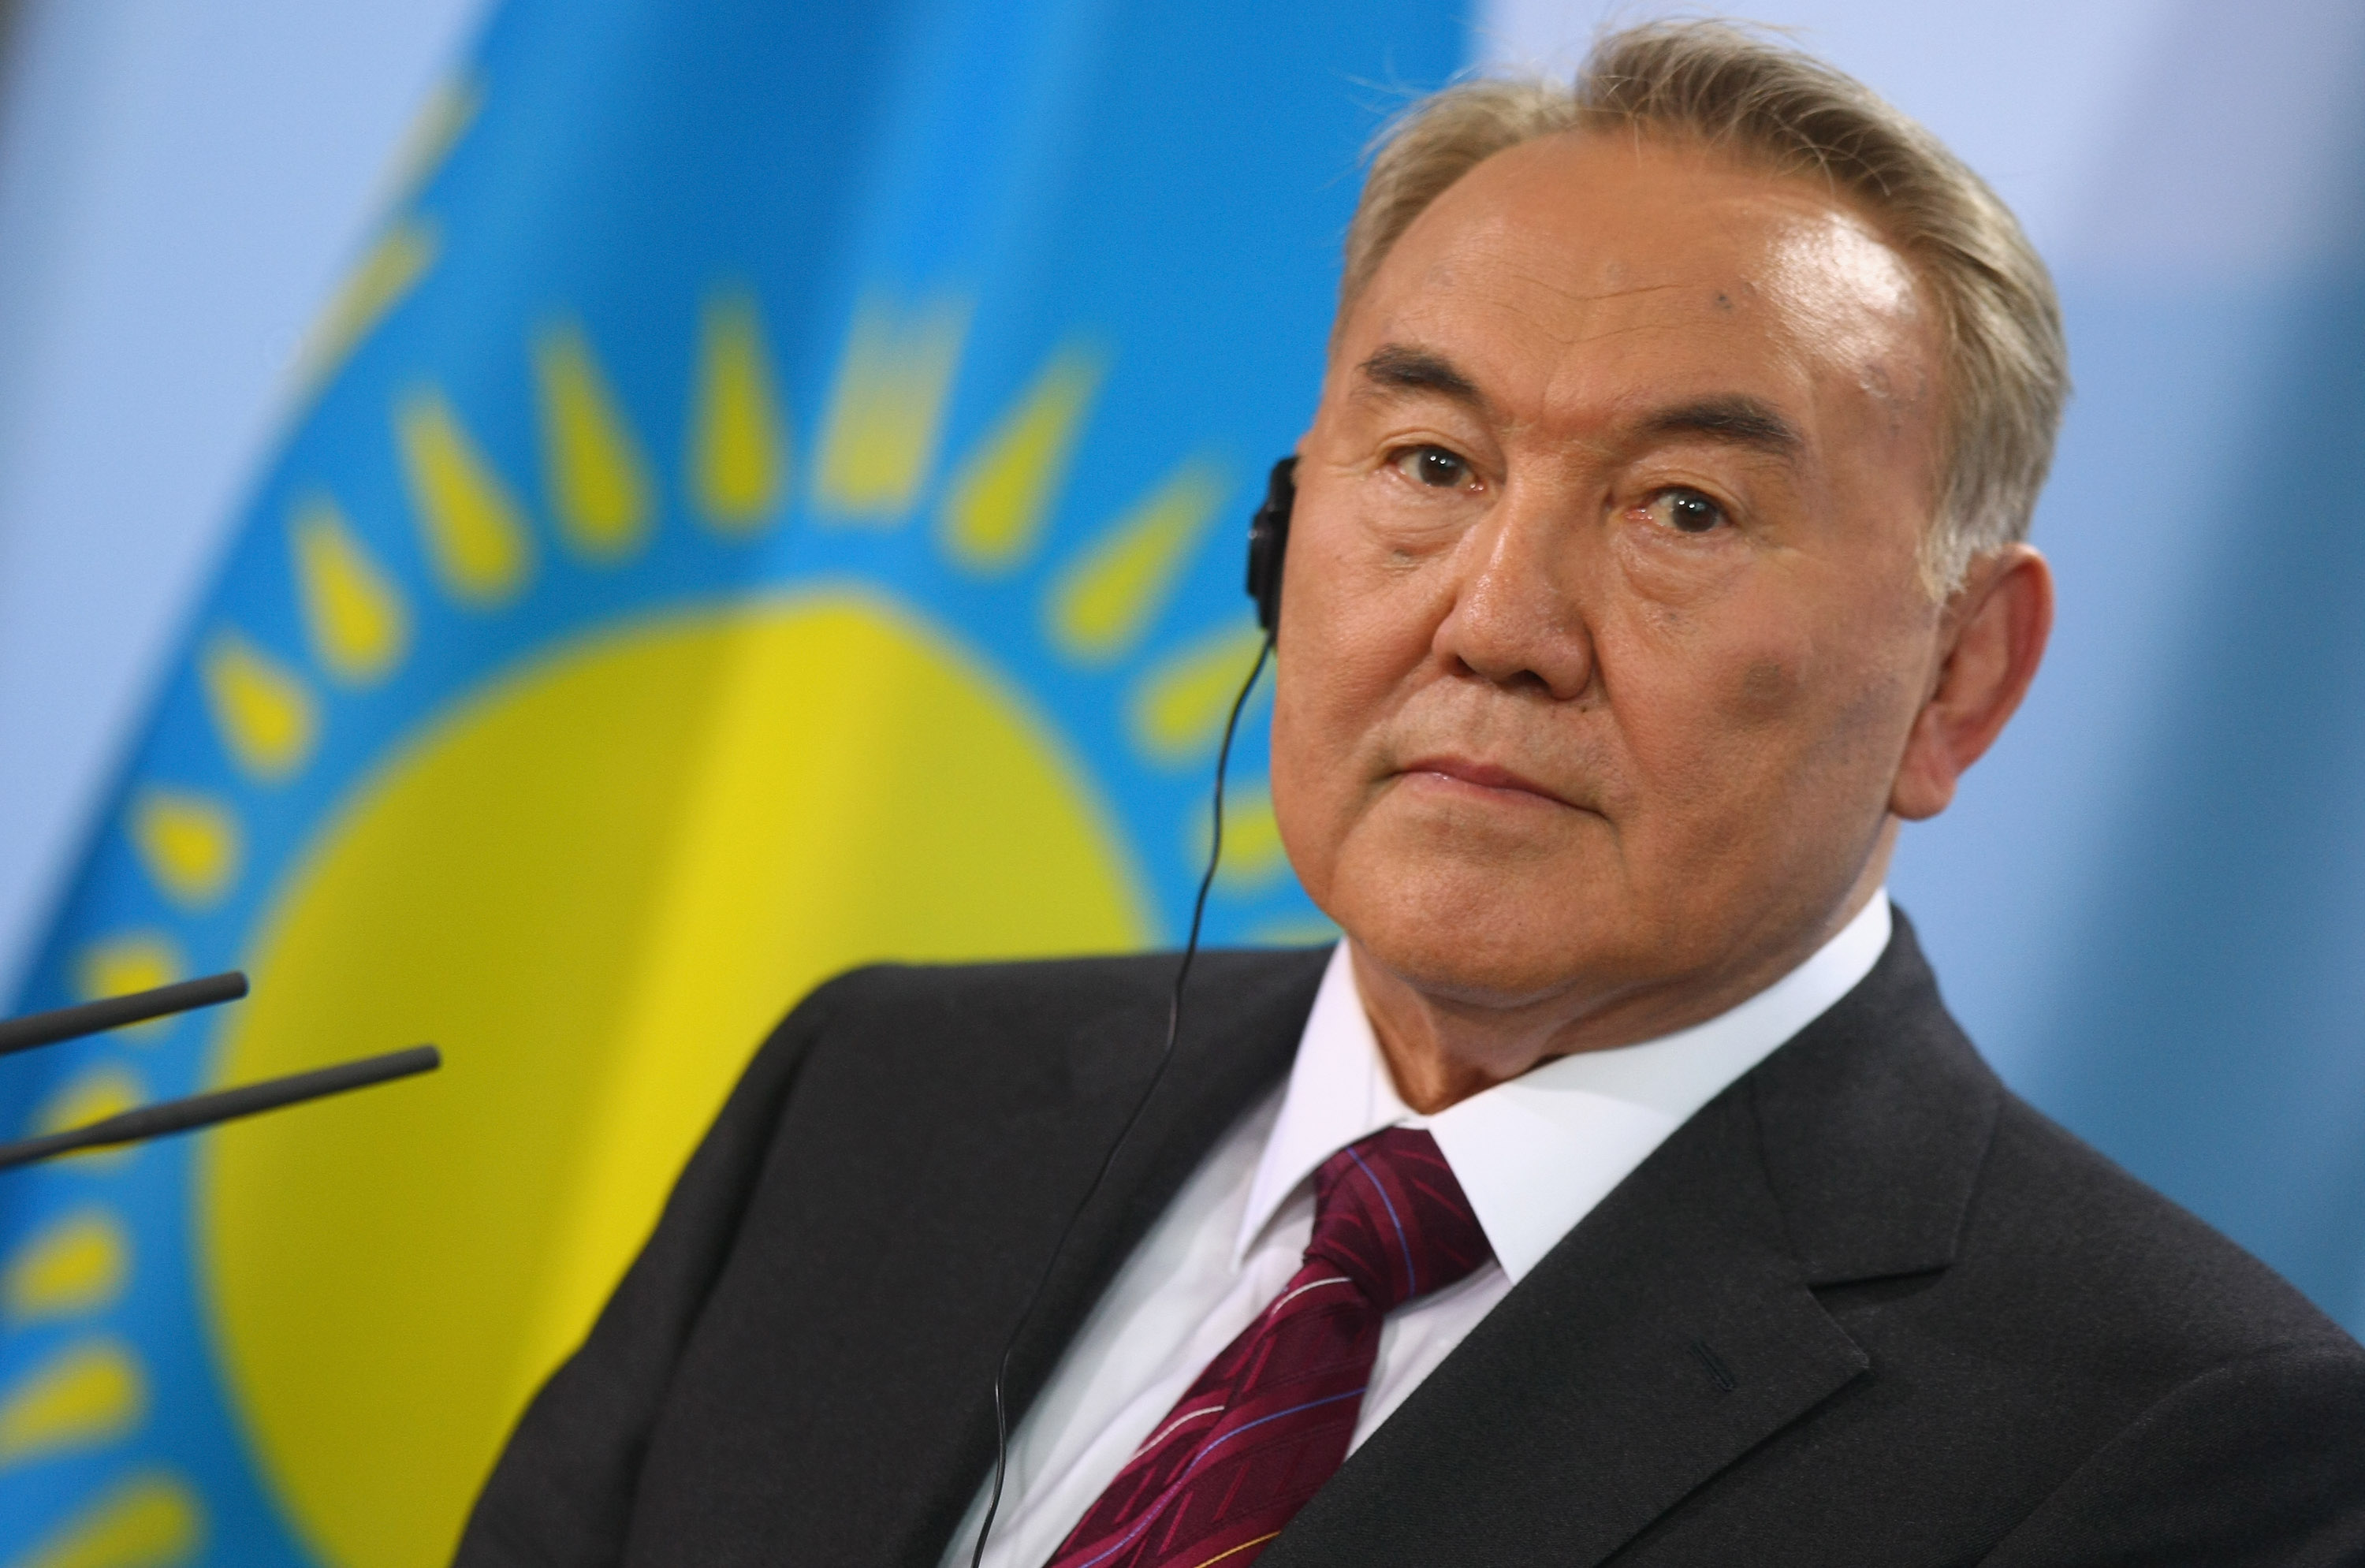 Nursultan Nazarbajev